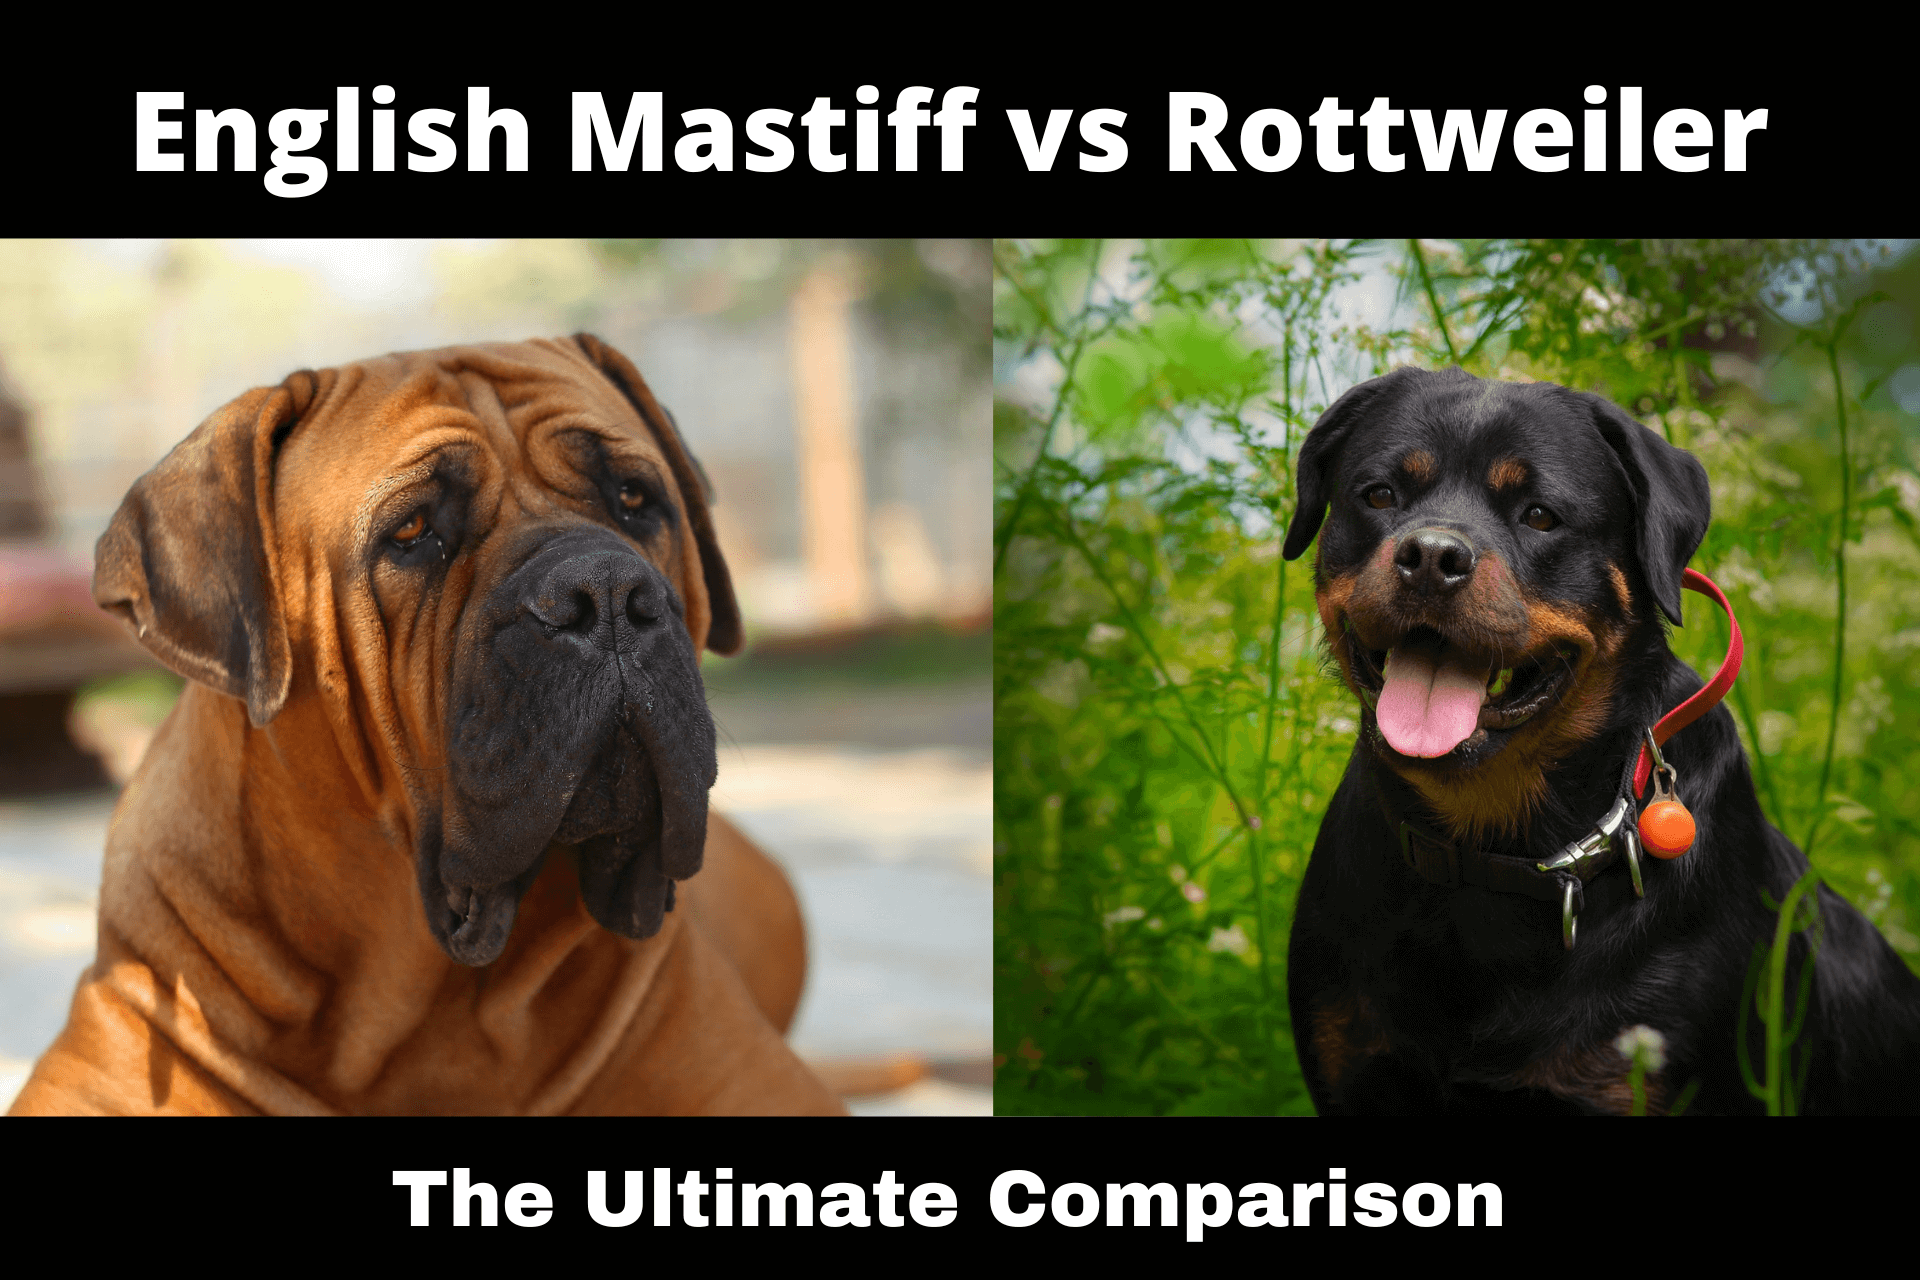 English Mastiff vs Rottweiler Comparison